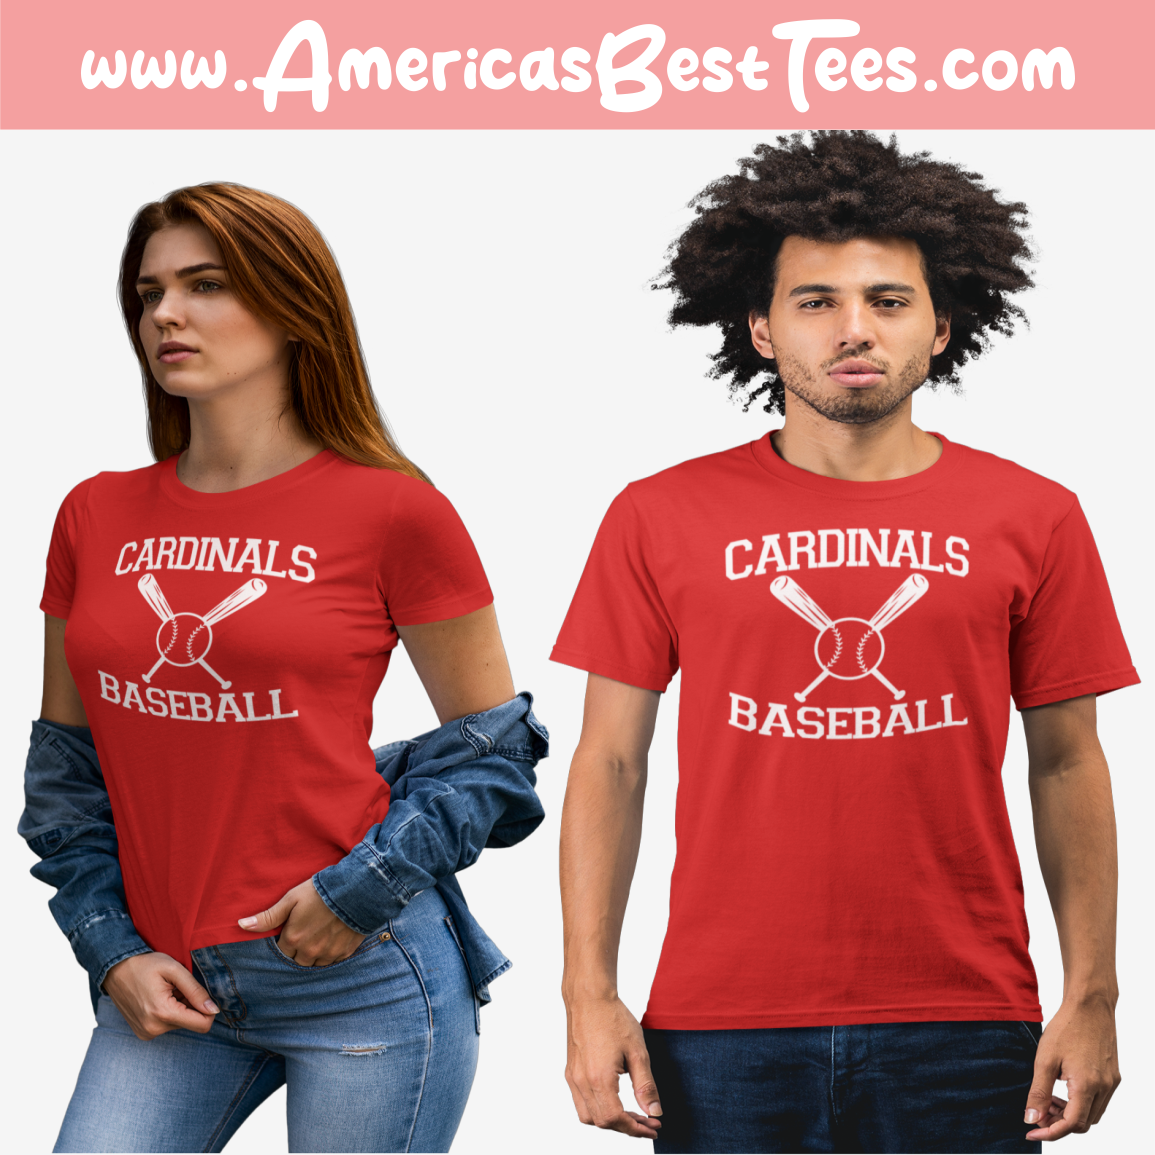 Cardinals Baseball White Print T-Shirt